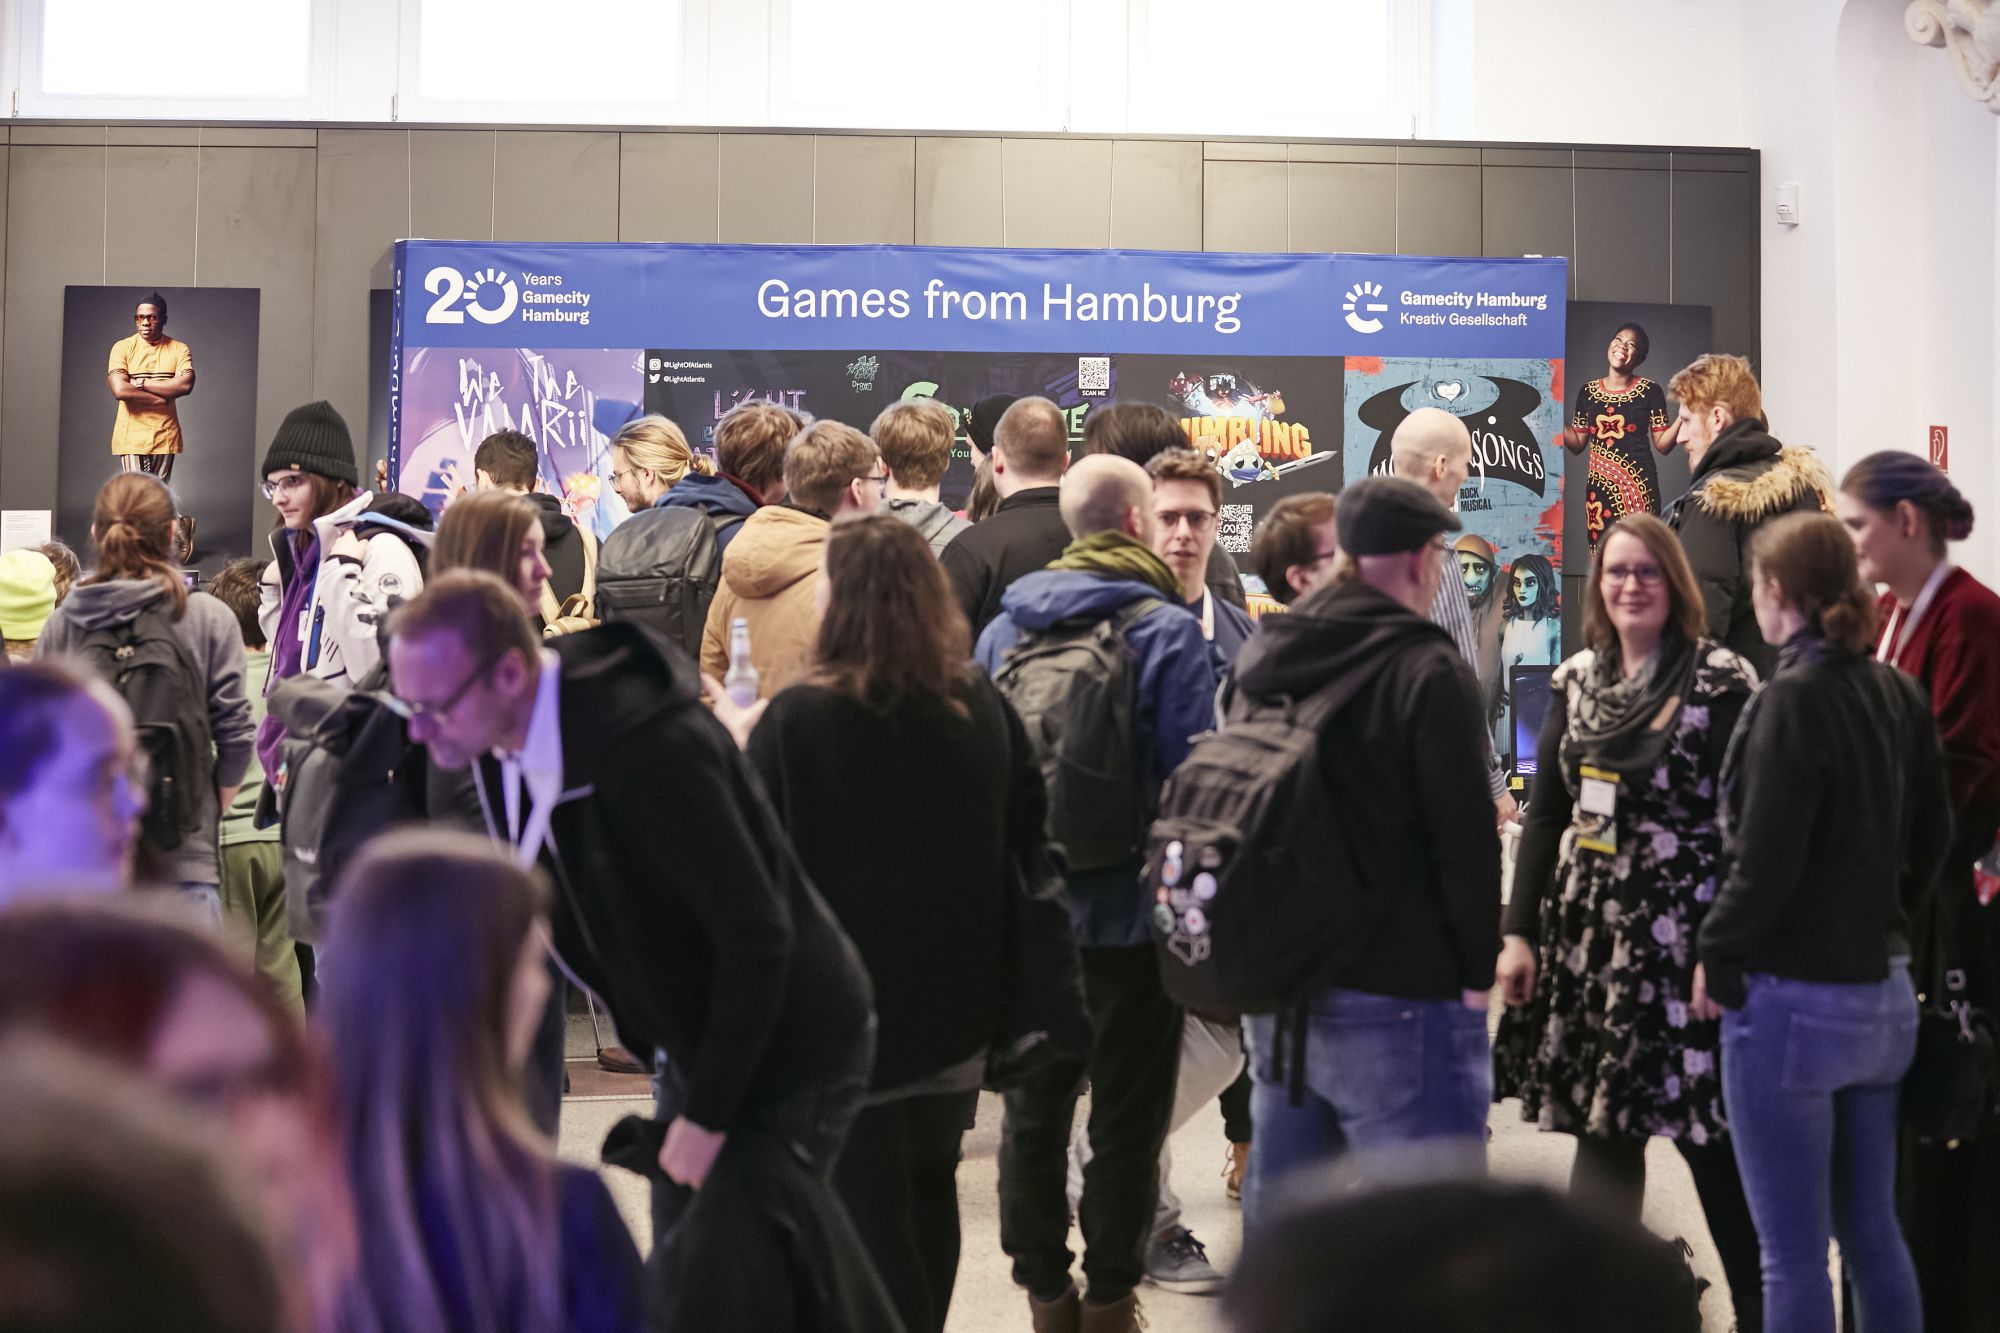 The Gamecity Hamburg booth presenting indie games from Hamburg | Photo by Rolf Otzipka